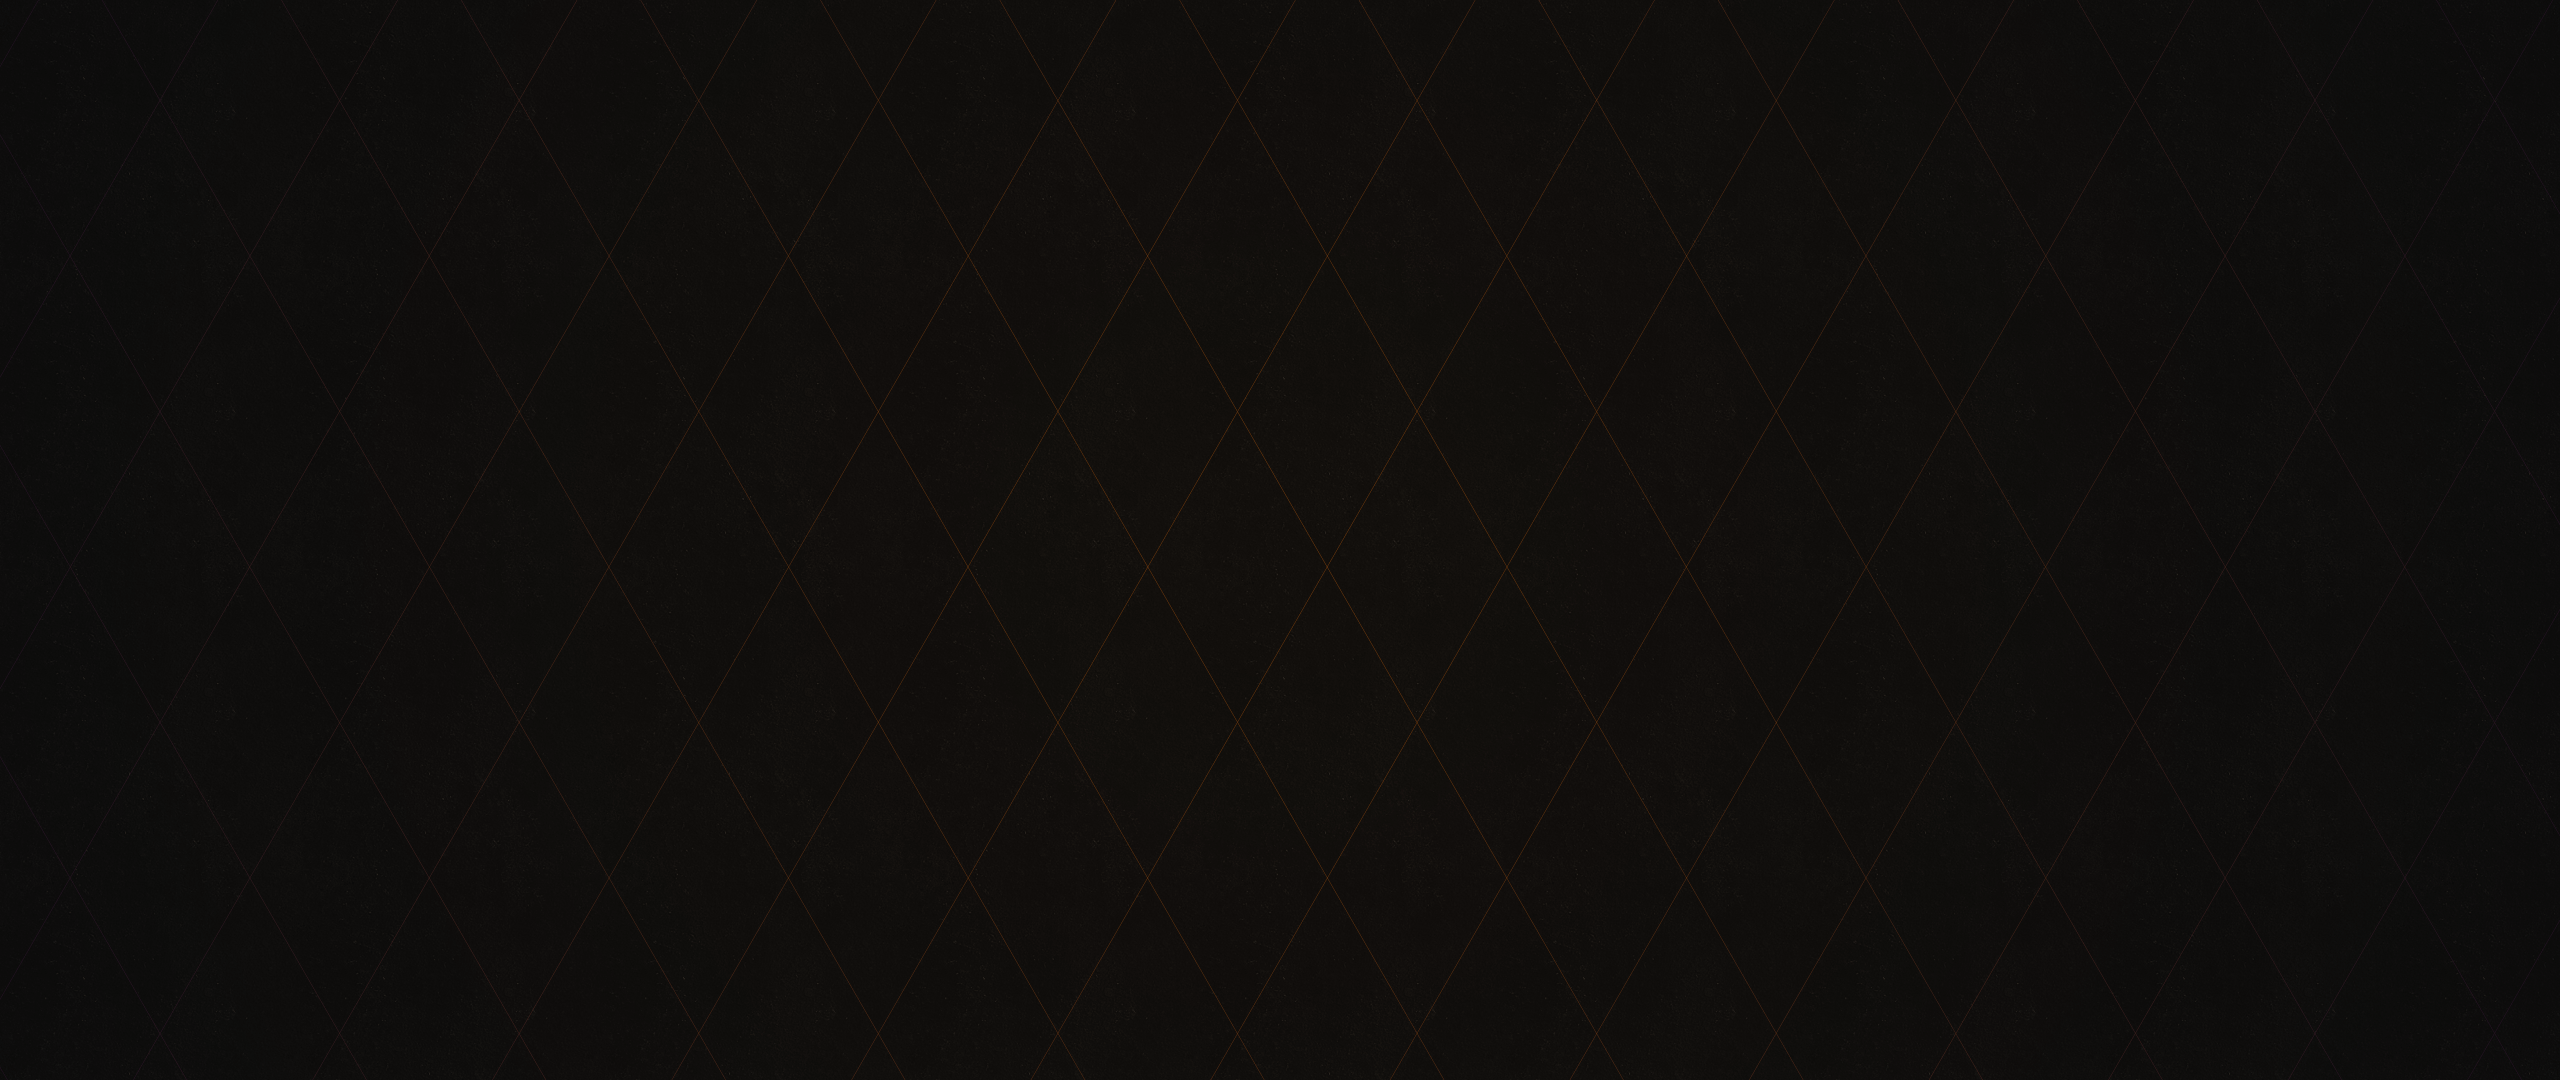 2560X1080 Black Wallpapers